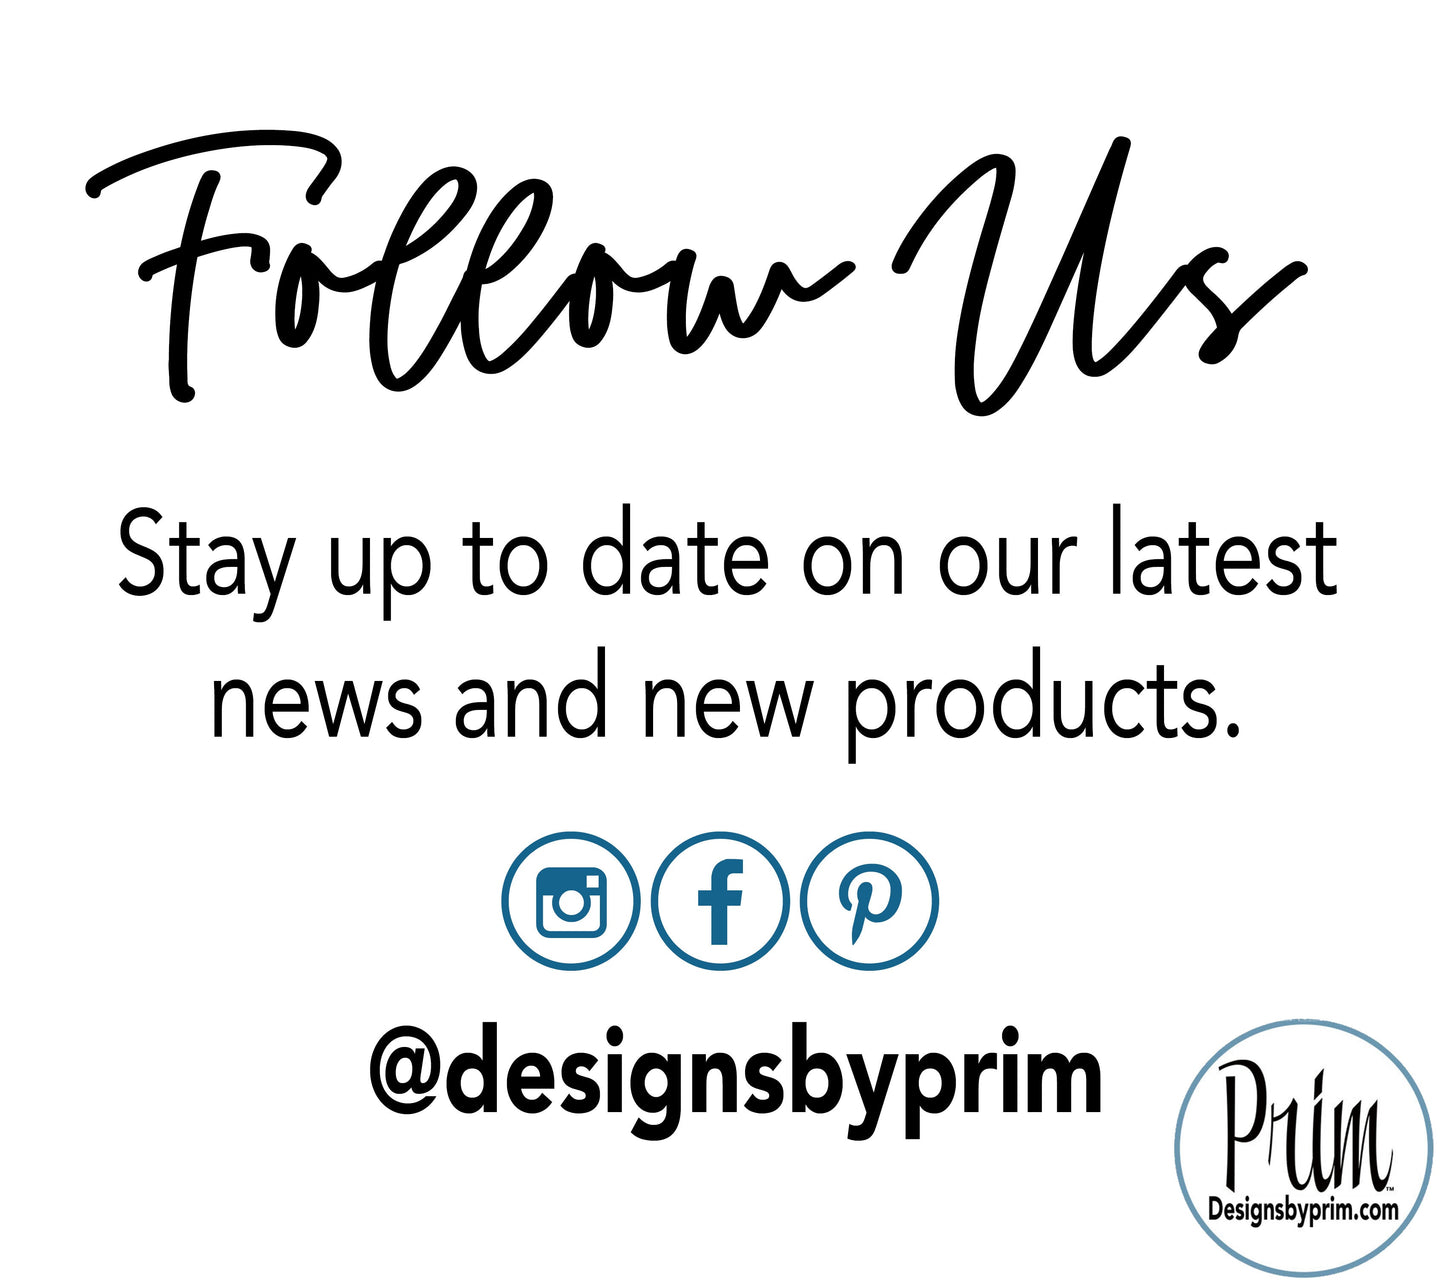 Designs by Prim Custom Wood Signs Follow Us Instagram Facebook Social Media